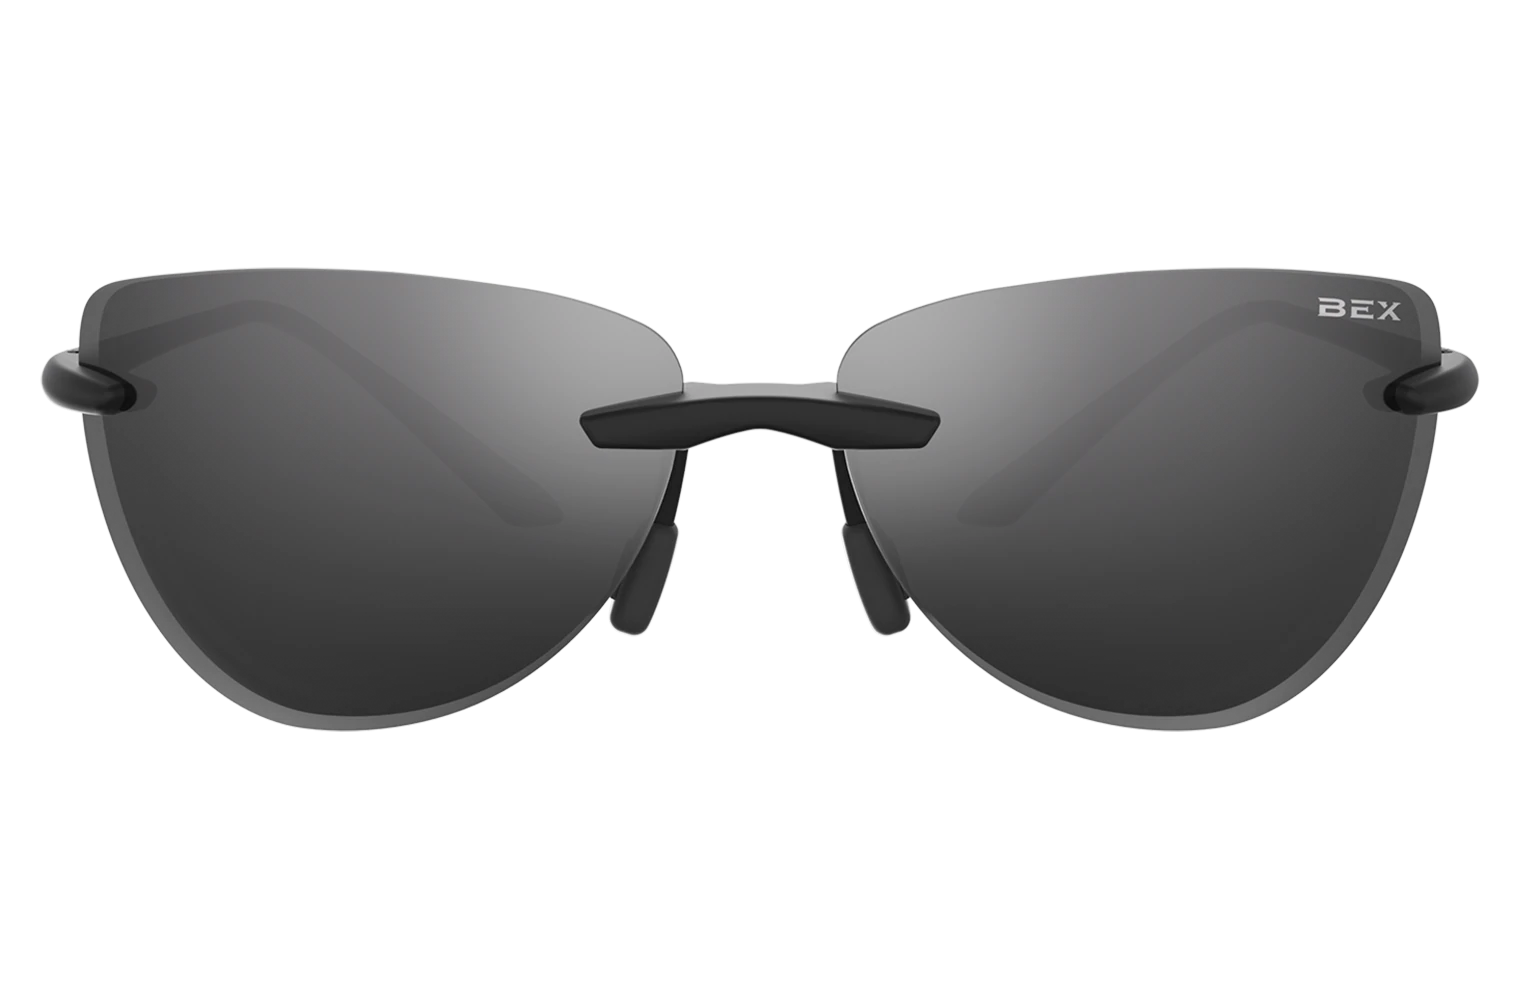 AUSTYN Black/Gray Sunglasses